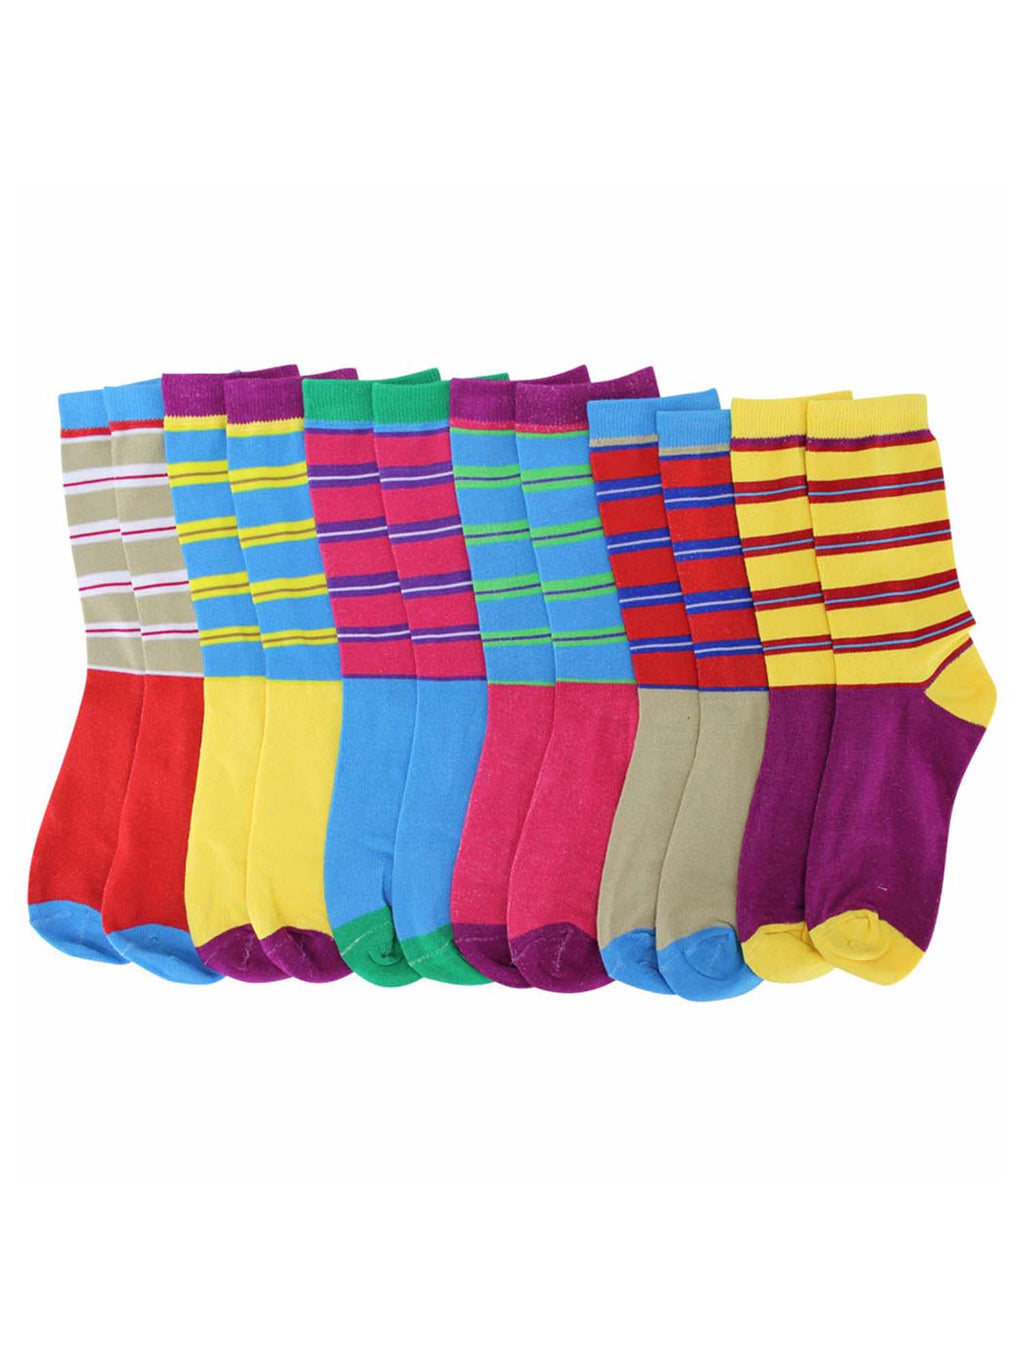 Colorful & Bright Stripe Womens 6 Pack Novelty Socks